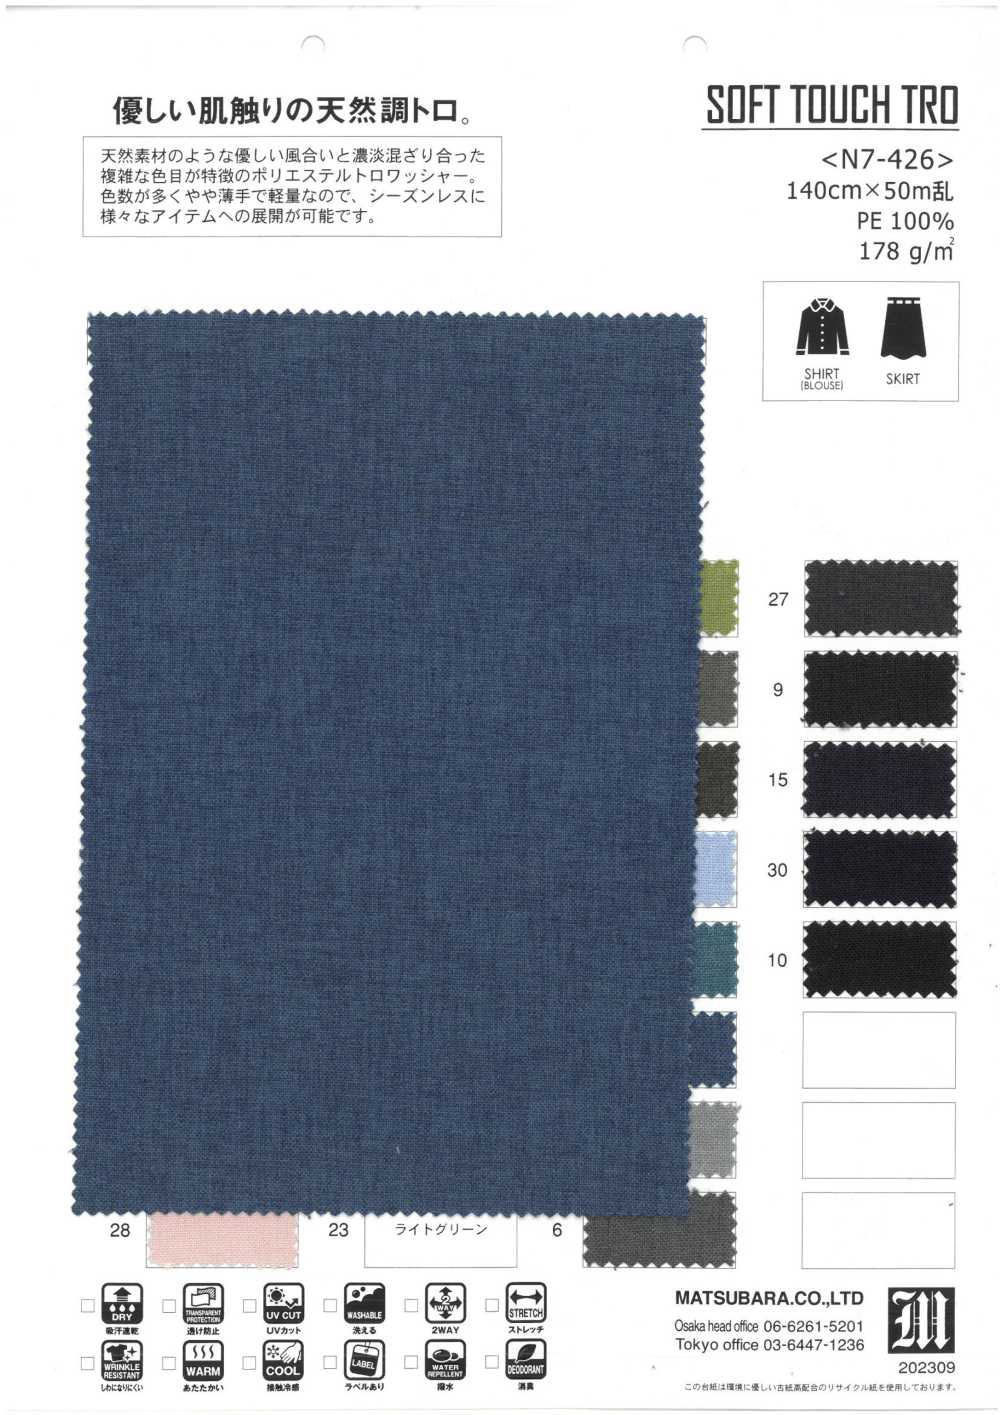 N7-426 SOFY TOUTCH TRO[Textilgewebe] Matsubara